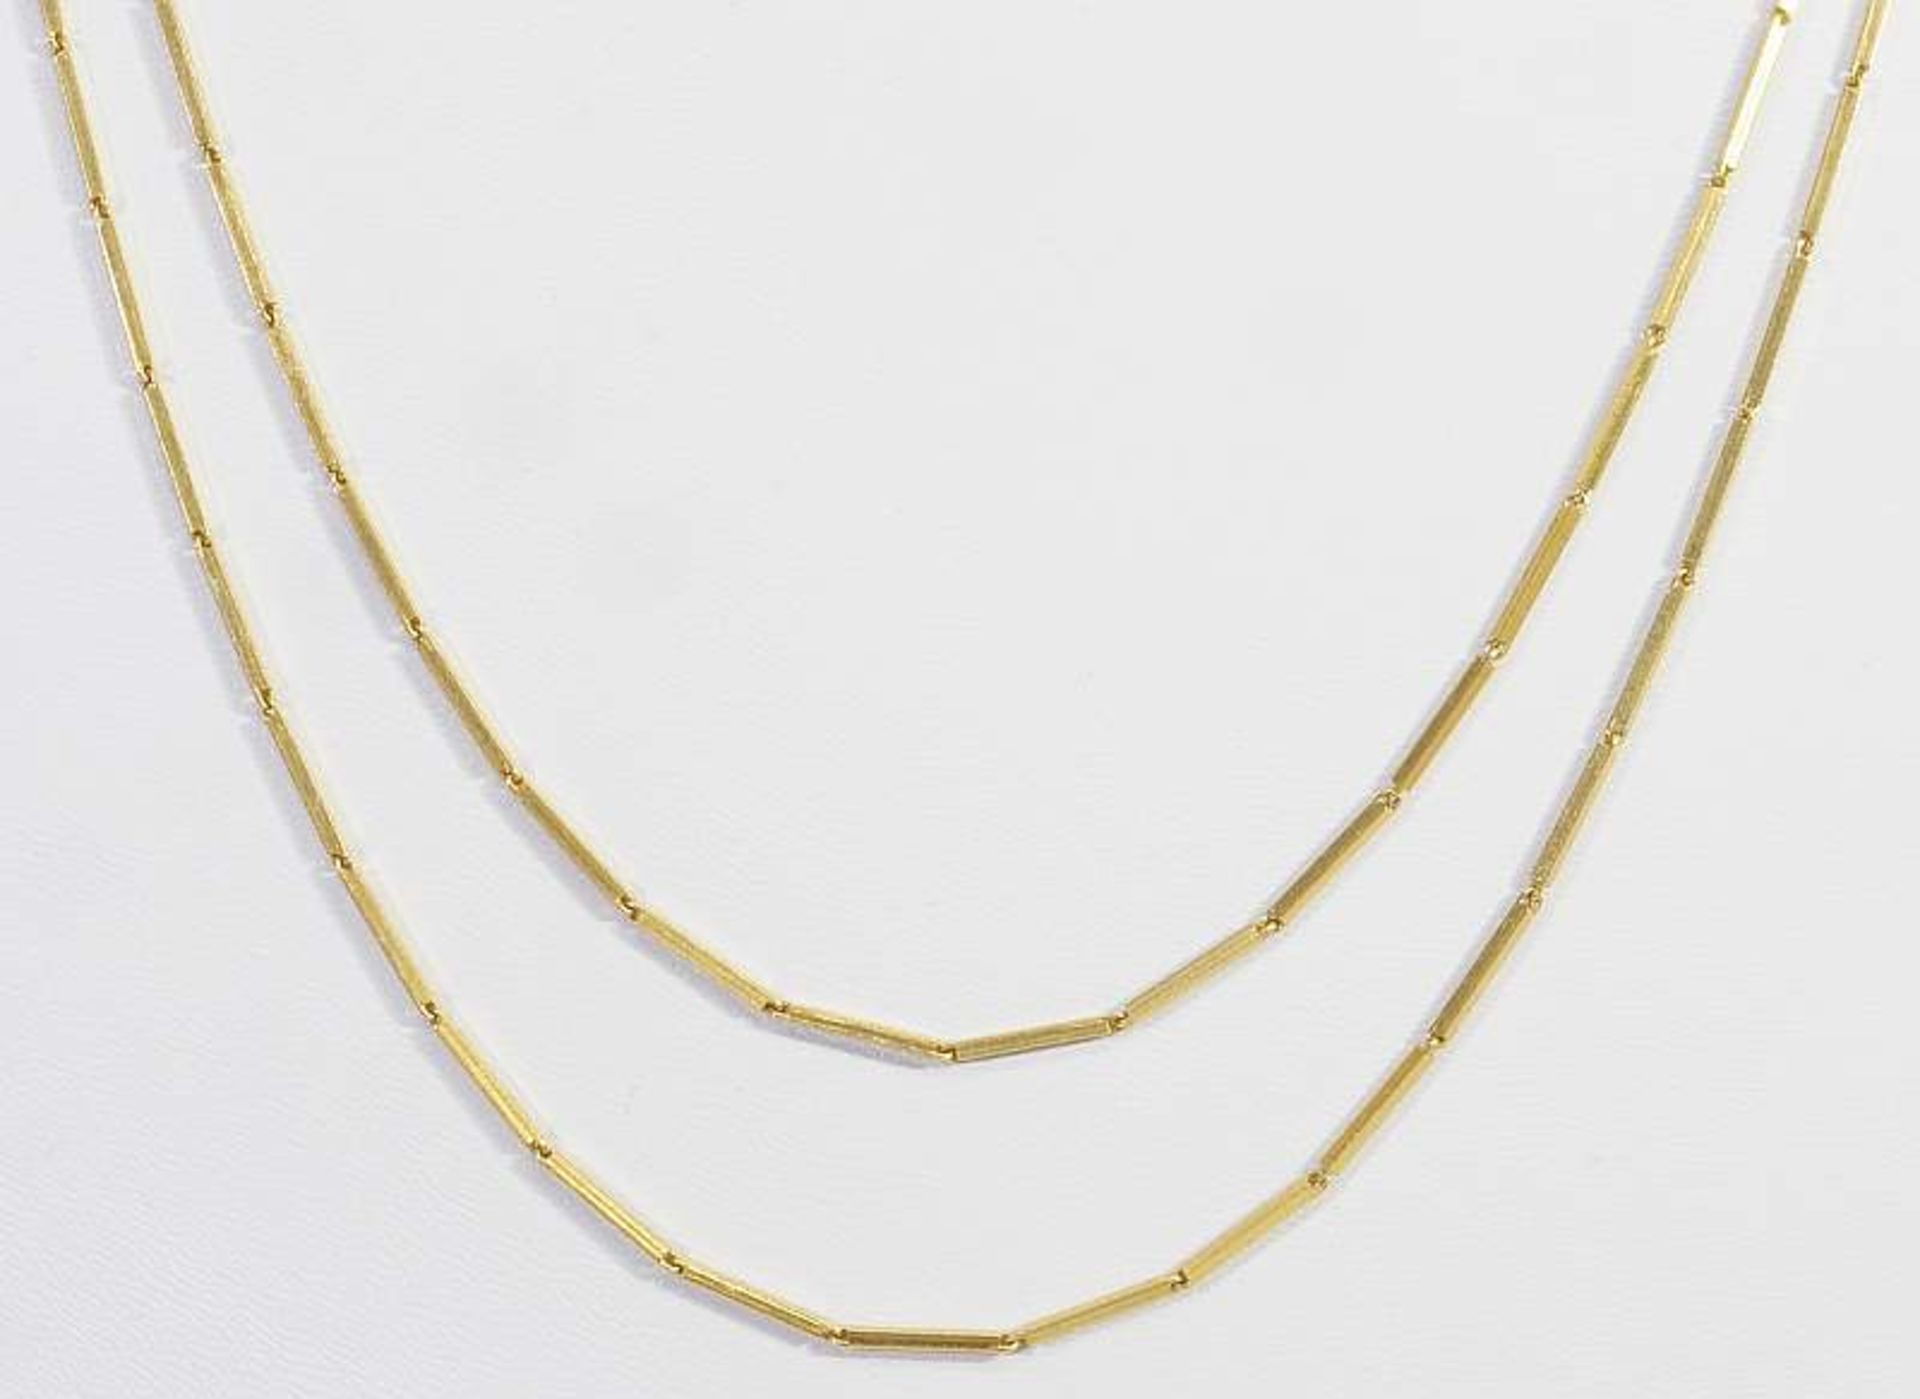 Zweireihige Stabkette.Zweireihige Stabkette mit Ringösenverschluß. 750er Gelbgold, Länge ca. 78 - Image 3 of 5